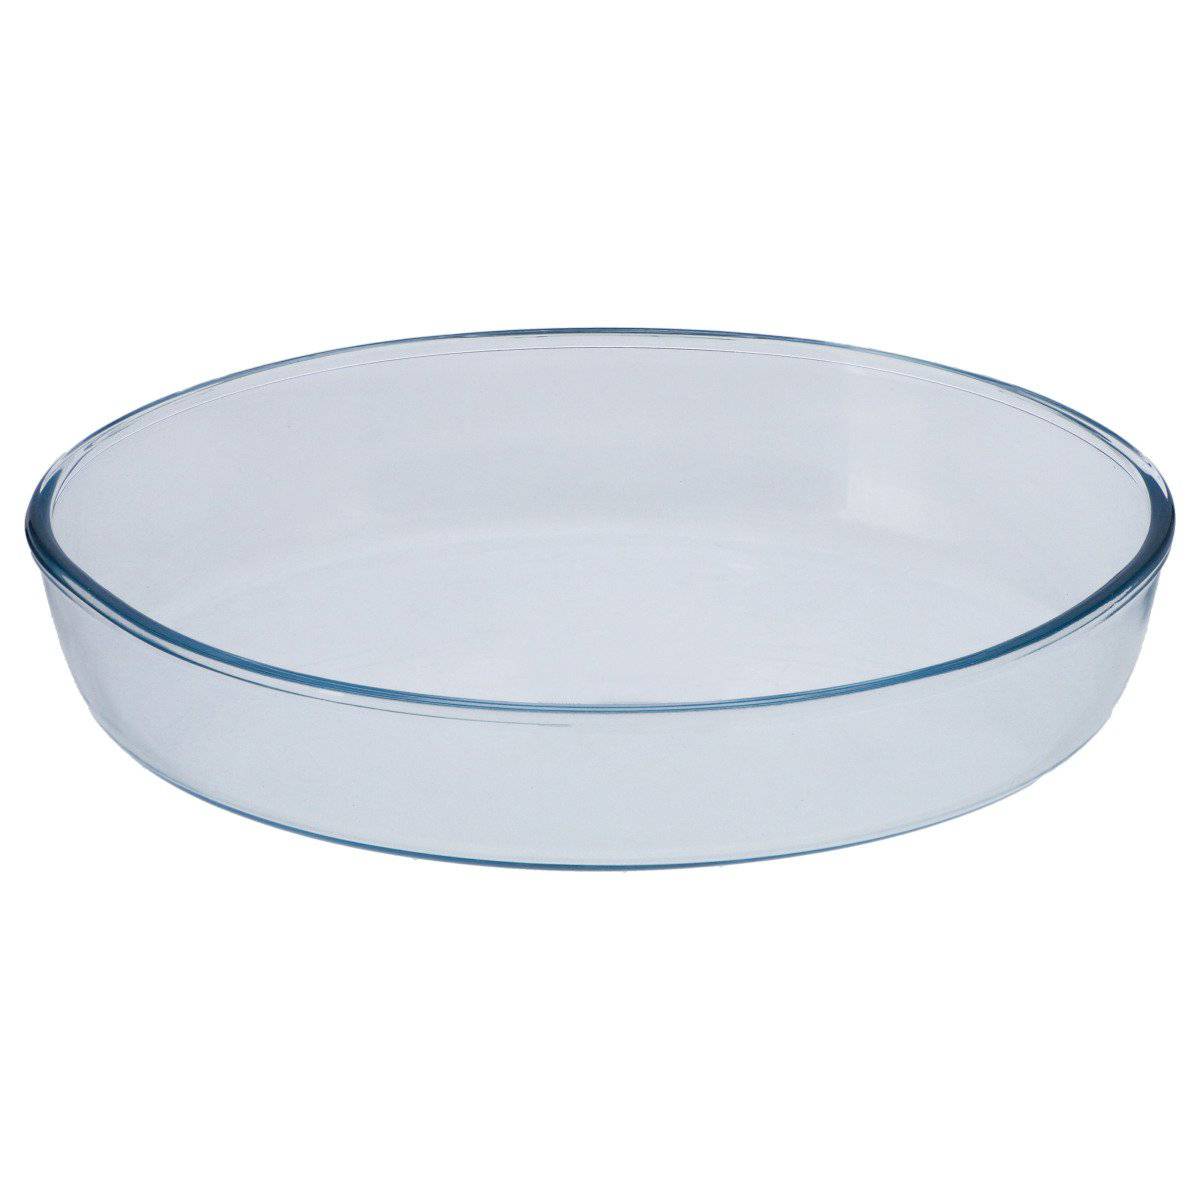 Oval Tray Glass Transparent Std 59064